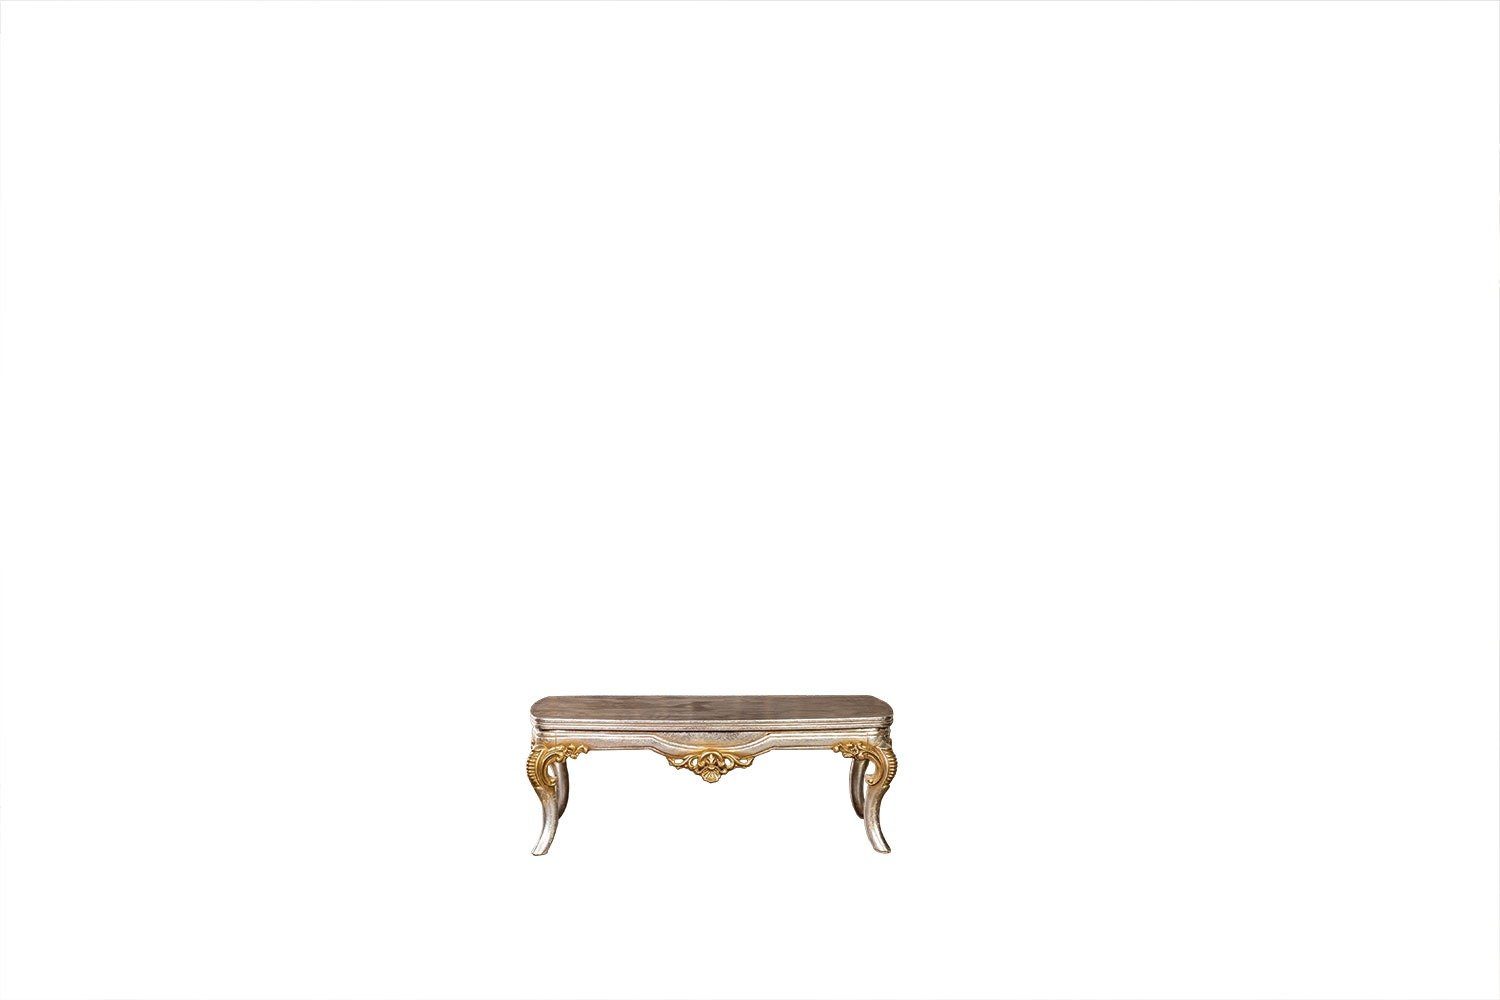 Couchtisch, aus Klassische Holz Möbel JVmoebel - Couchtisch Klassischer Barock Wohnzimmer